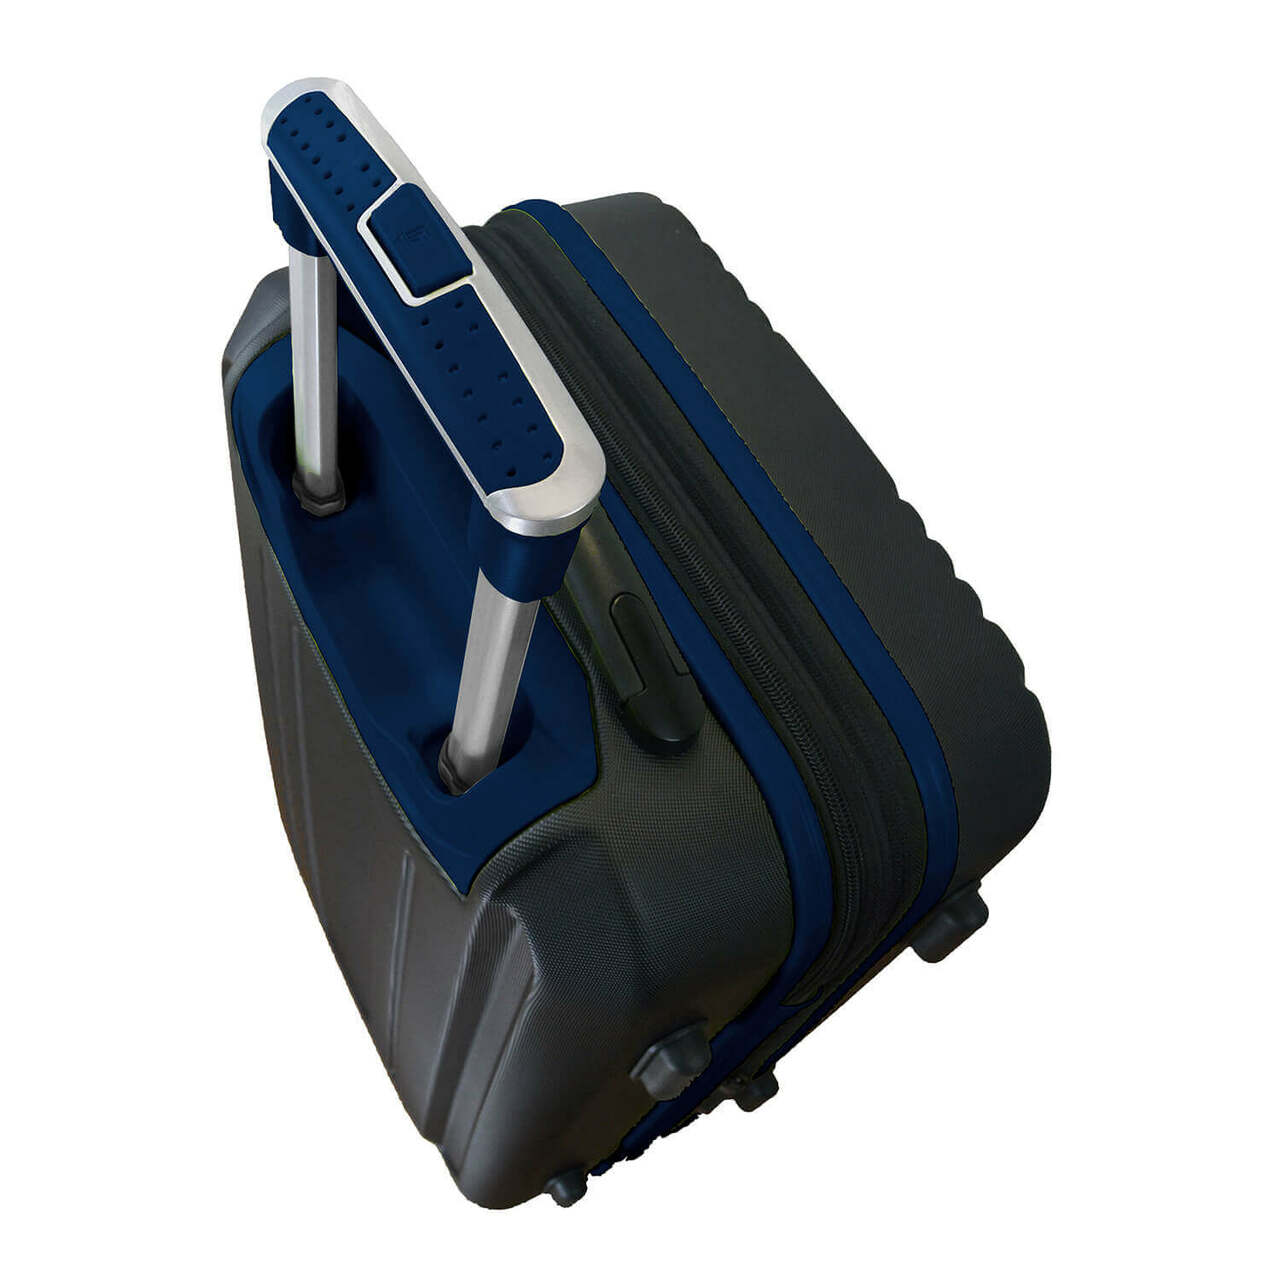 Kentucky Carry On Spinner Luggage | Kentucky Hardcase Two-Tone Luggage Carry-on Spinner in Navy